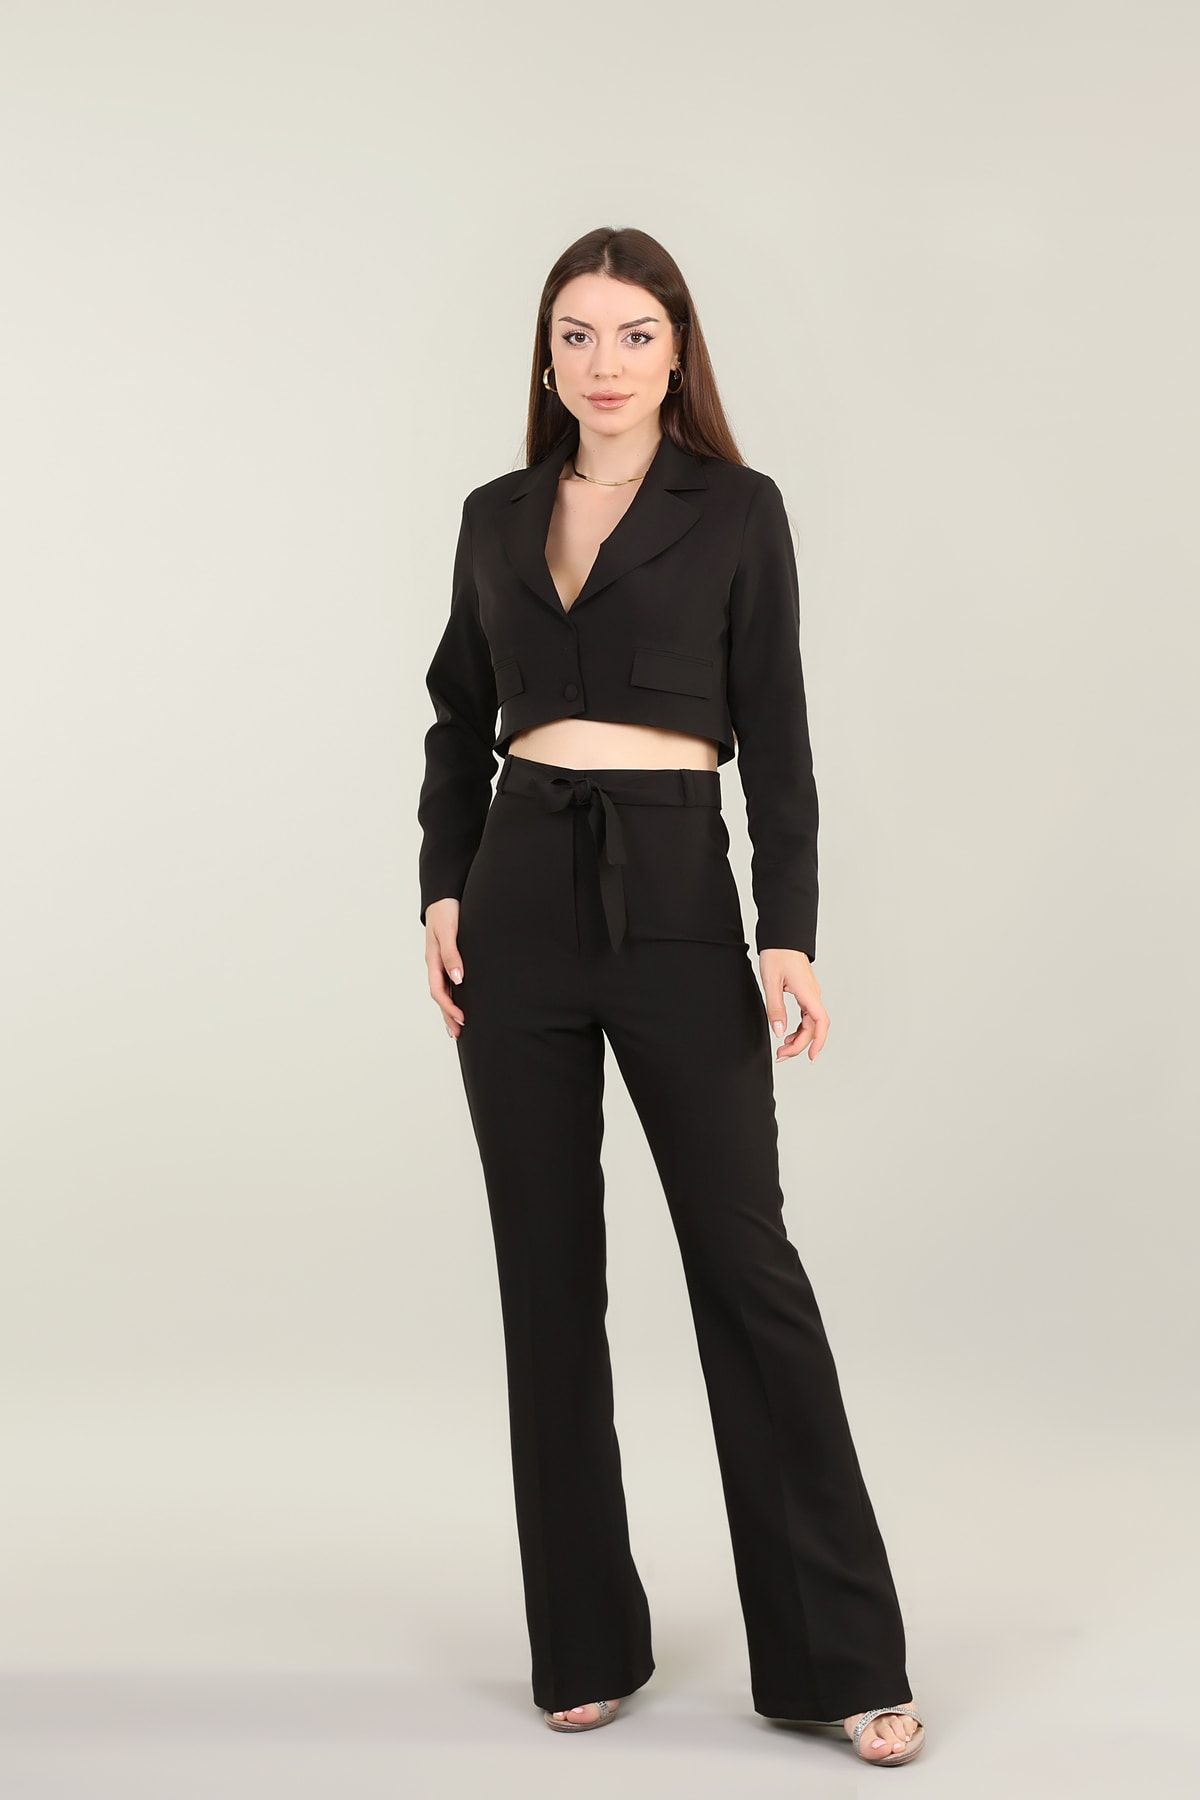 Raheel Fashion siyah pantolon ve krop ceket krep kumaş